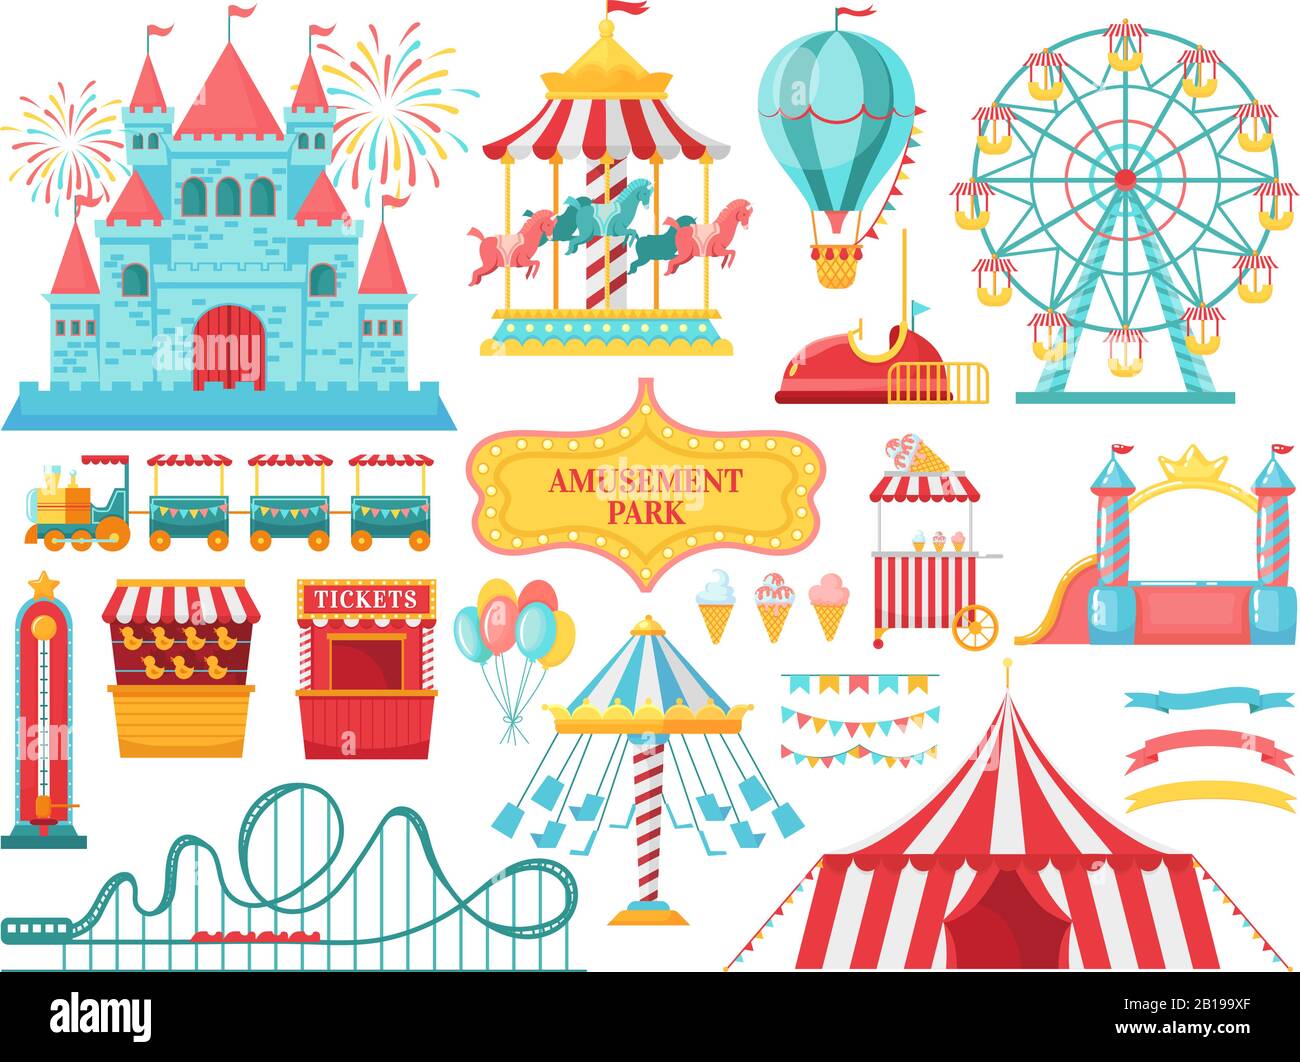 Amusement park attractions. Carnival kids carousel, ferris wheel attraction and amusing fairground entertainments vector illustration Stock Vector